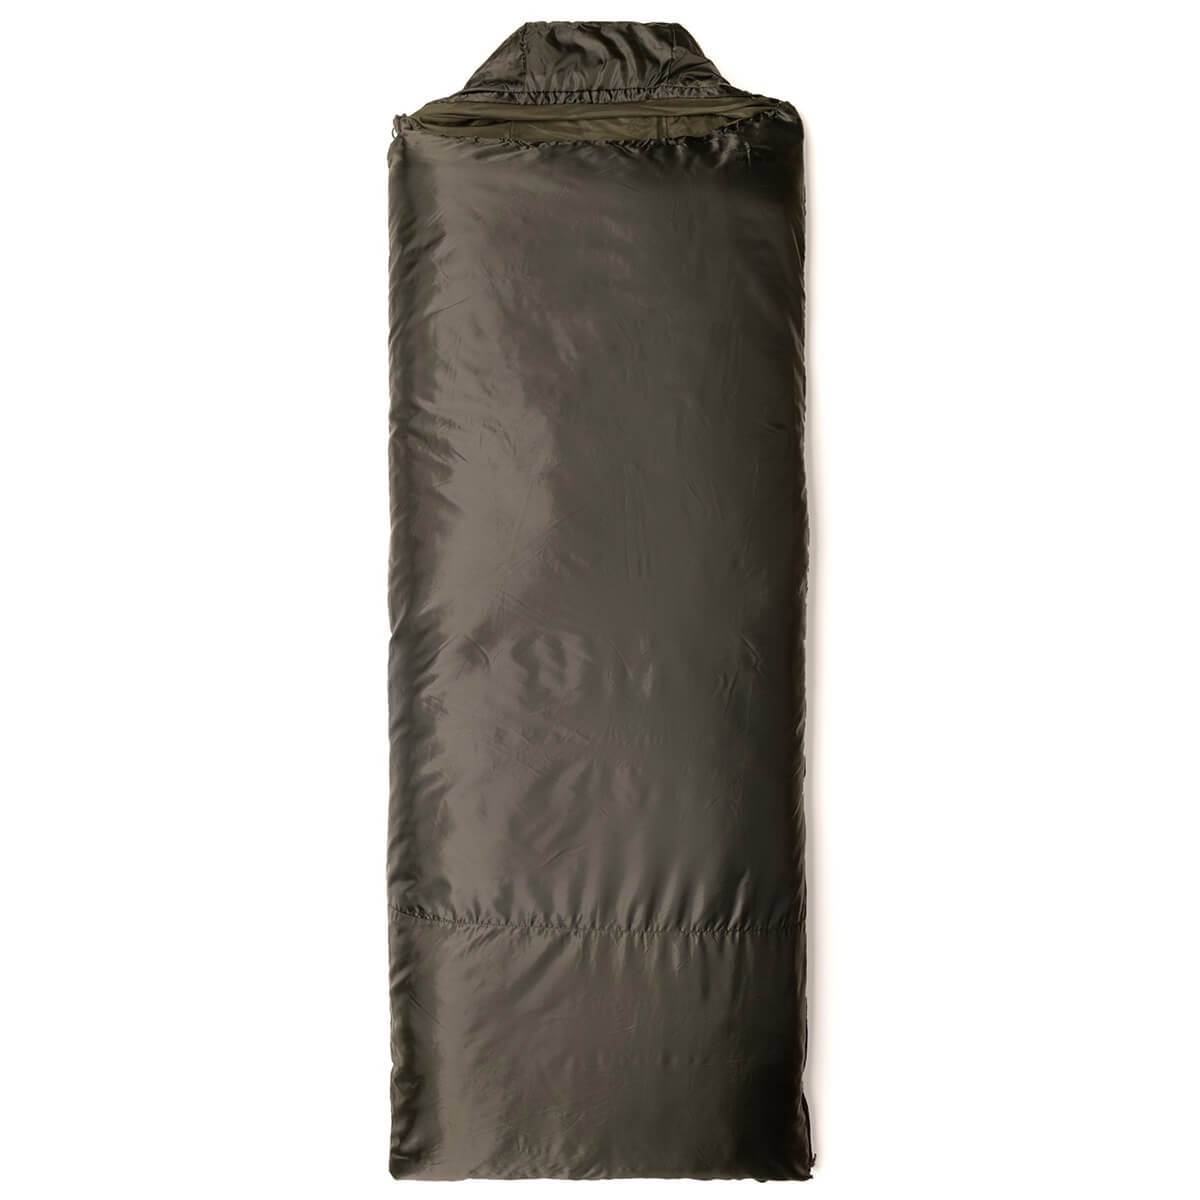 Snugpak Jungle Sleeping Bag with Mosquito Net - John Bull Clothing